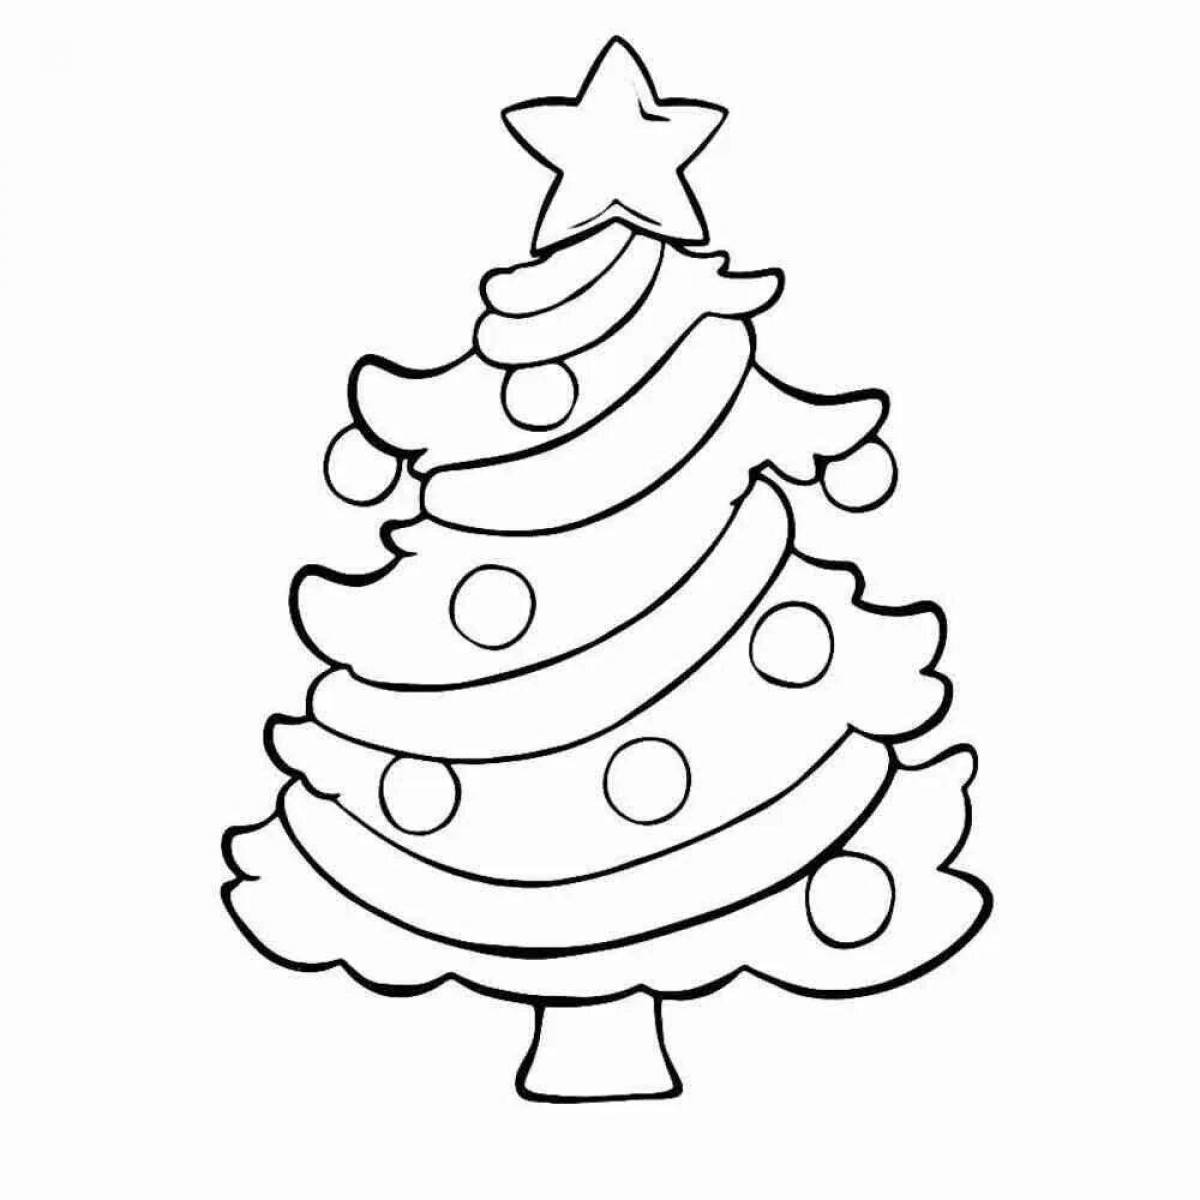 Rampant Christmas tree coloring for kids